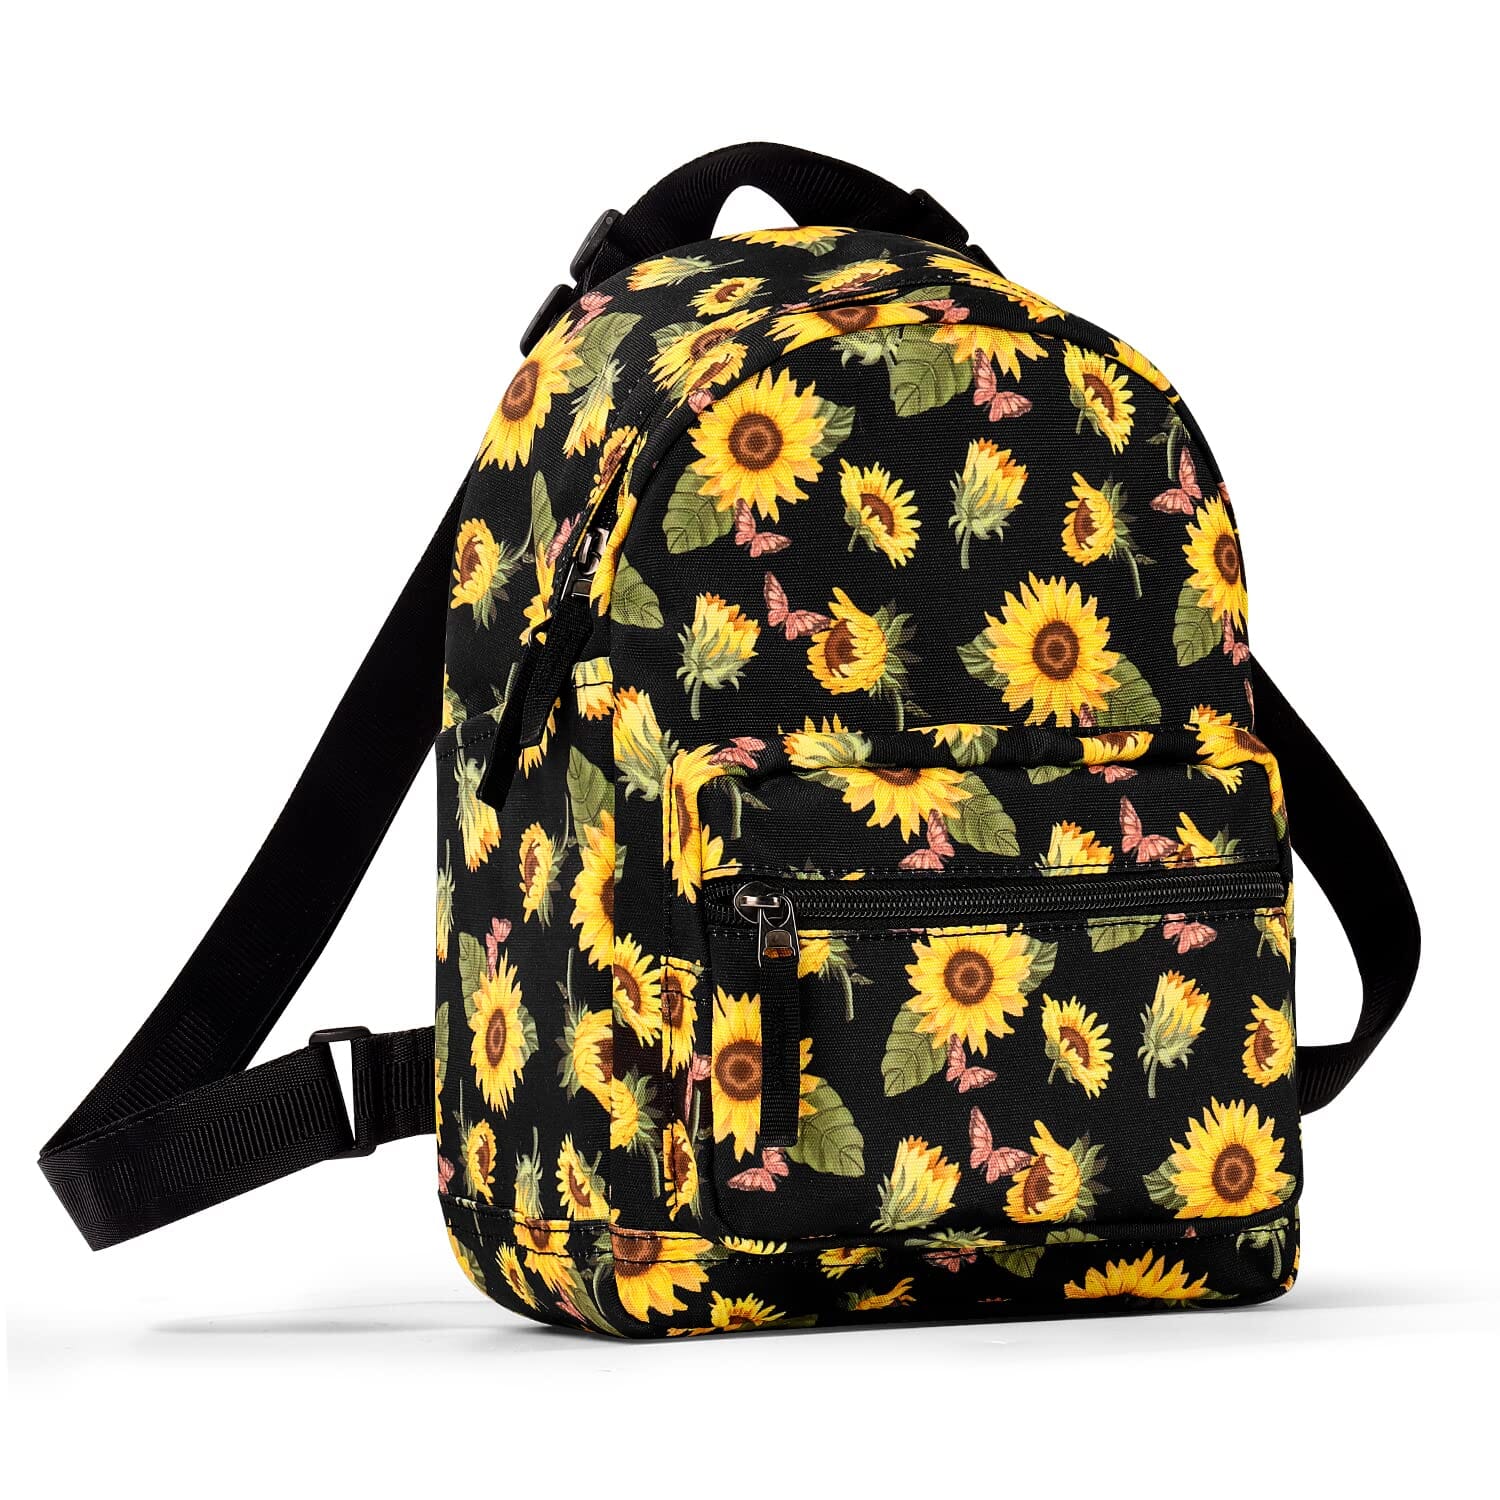 Choco Mocha Black Small Backpack for Girls and Women Teen, Kids Mini Backpack Purse Cute Little Girls Backpack School Travel Bookbag, Sunflower chocomochakids 